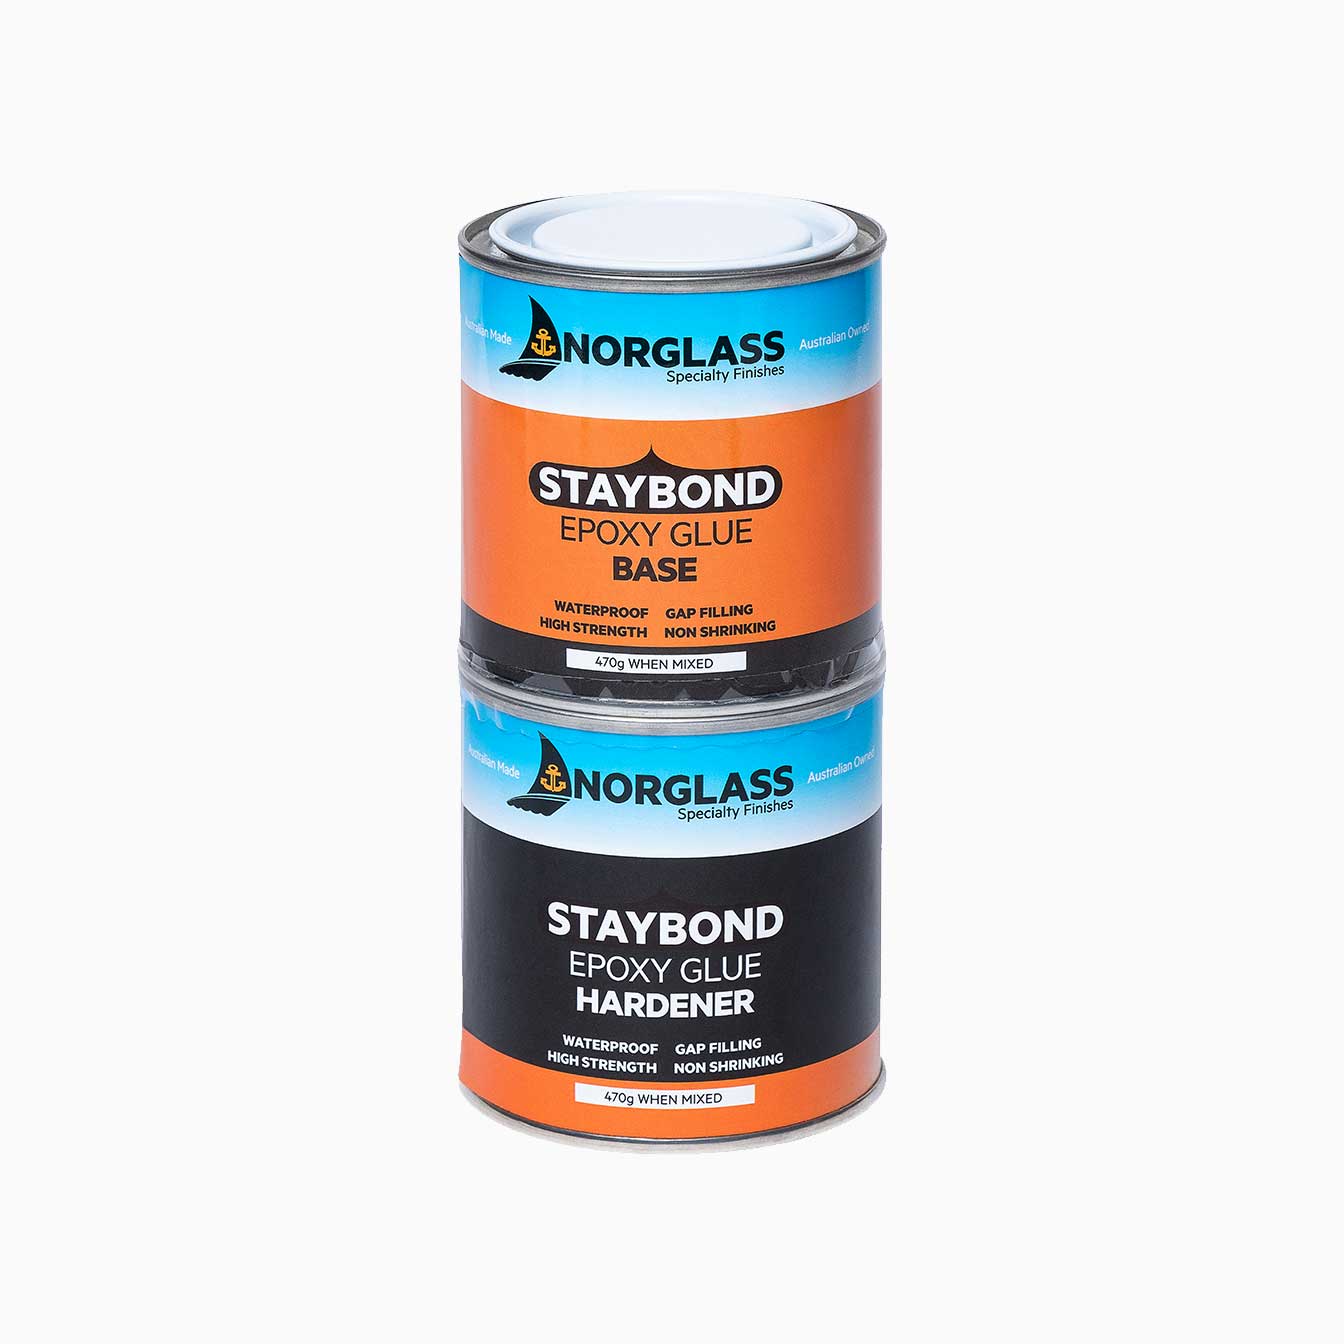 Staybond Epoxy Glue